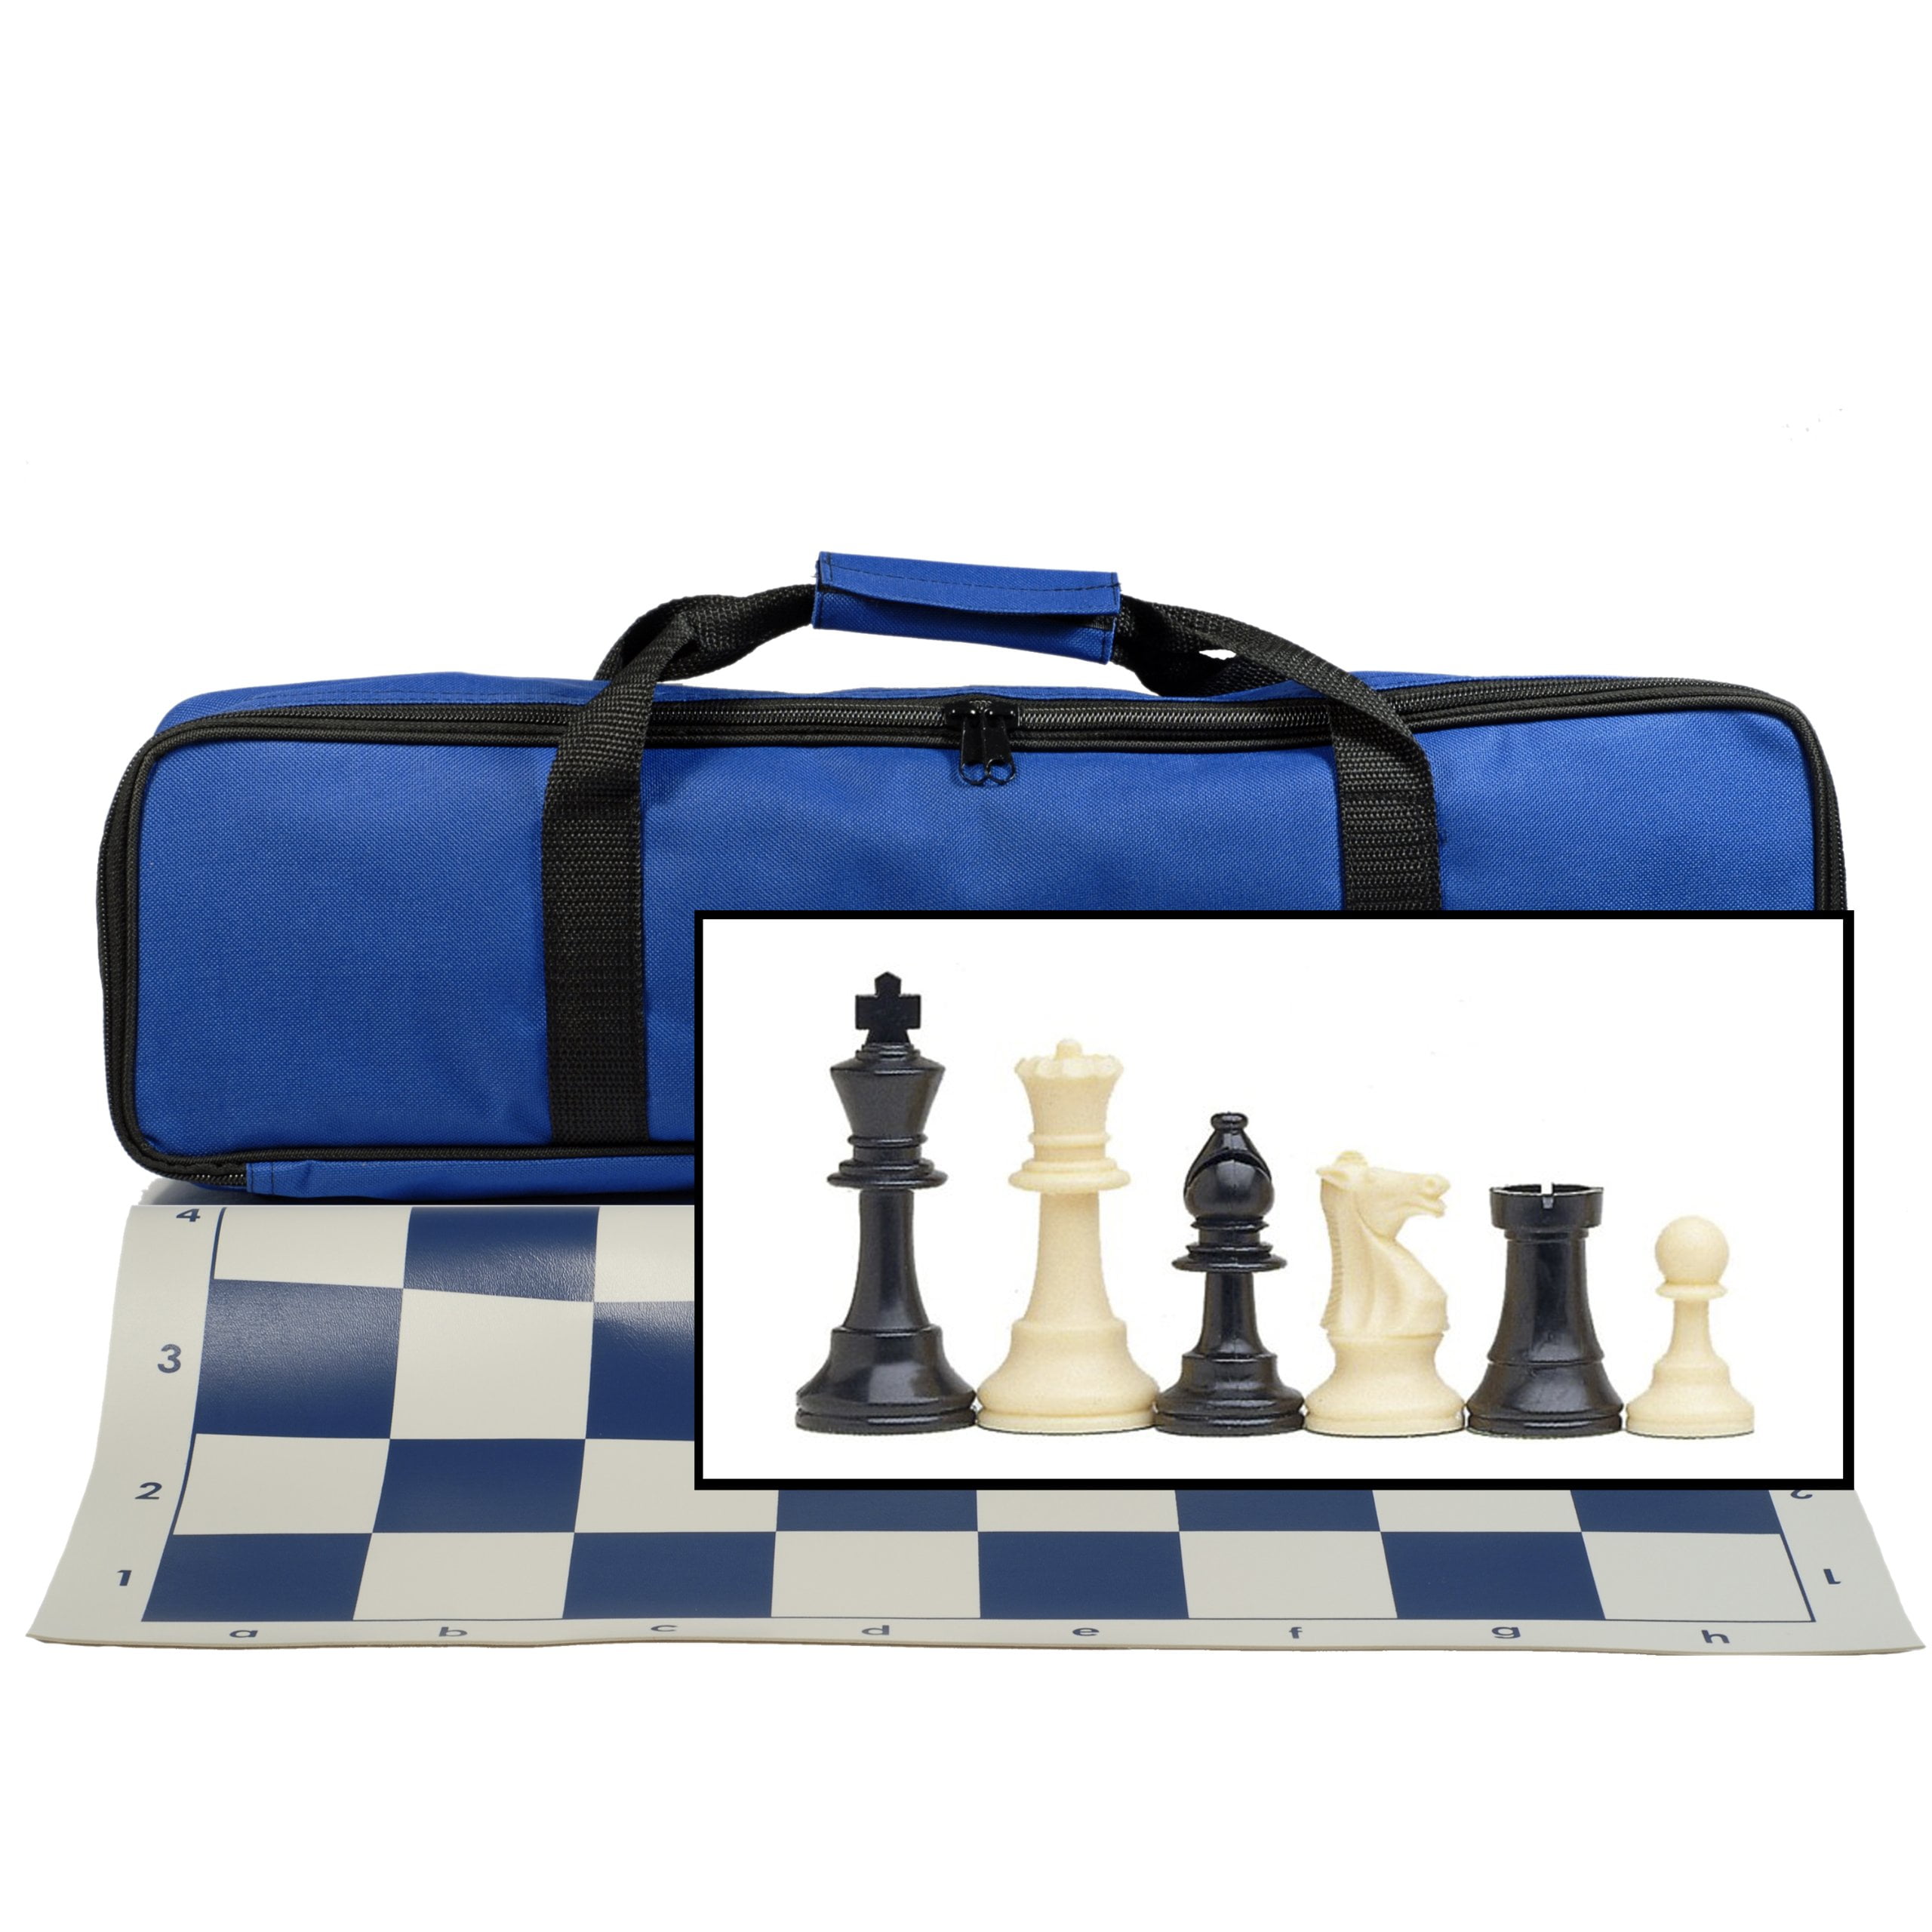 Chess Engine: Blue Marlin 15.5 NNUE : u/ChessEngines